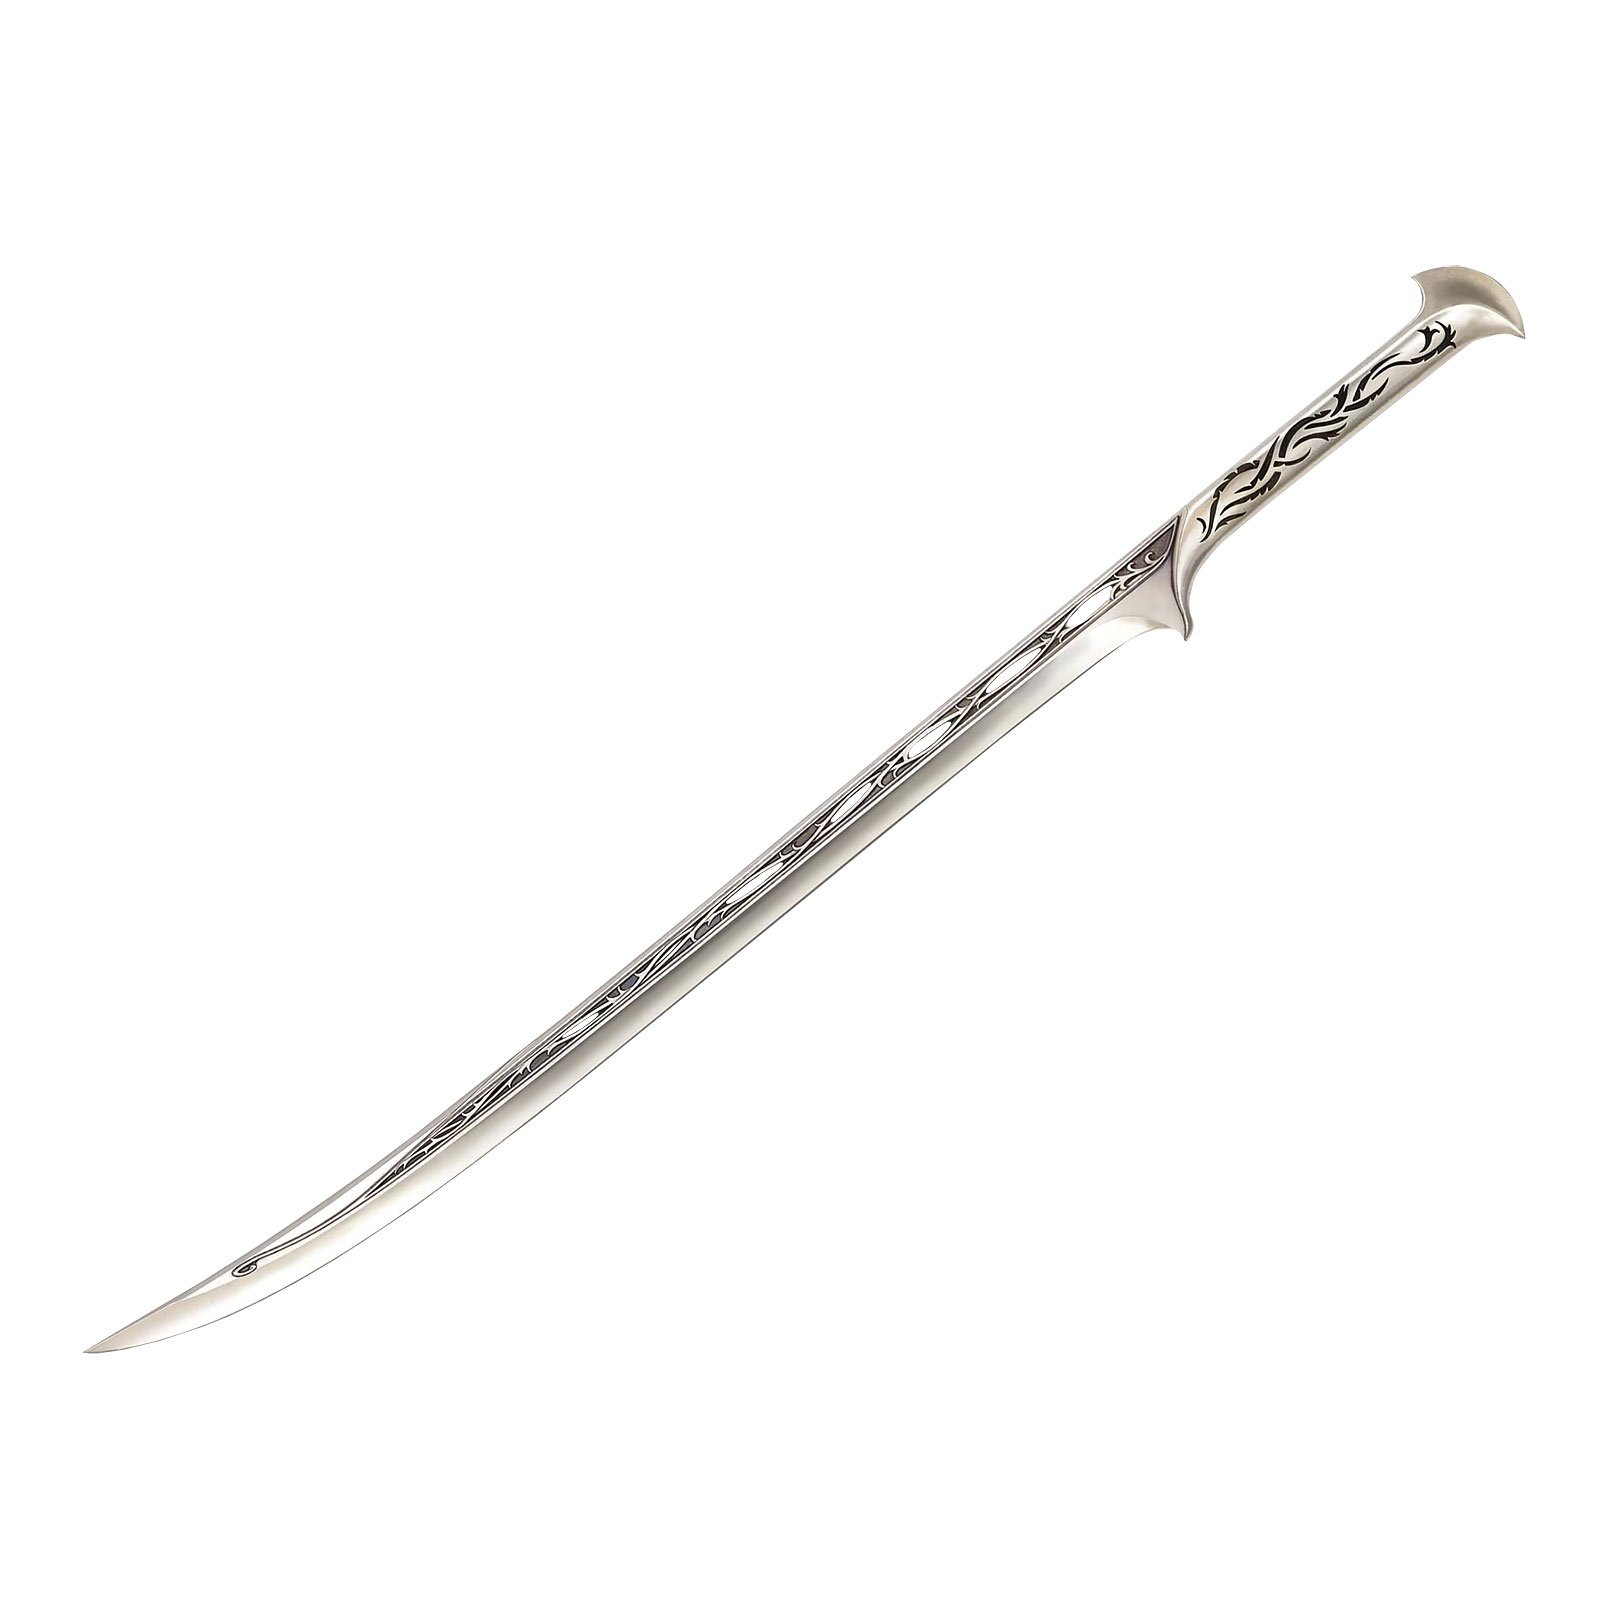 The Hobbit - Thranduil's Sword